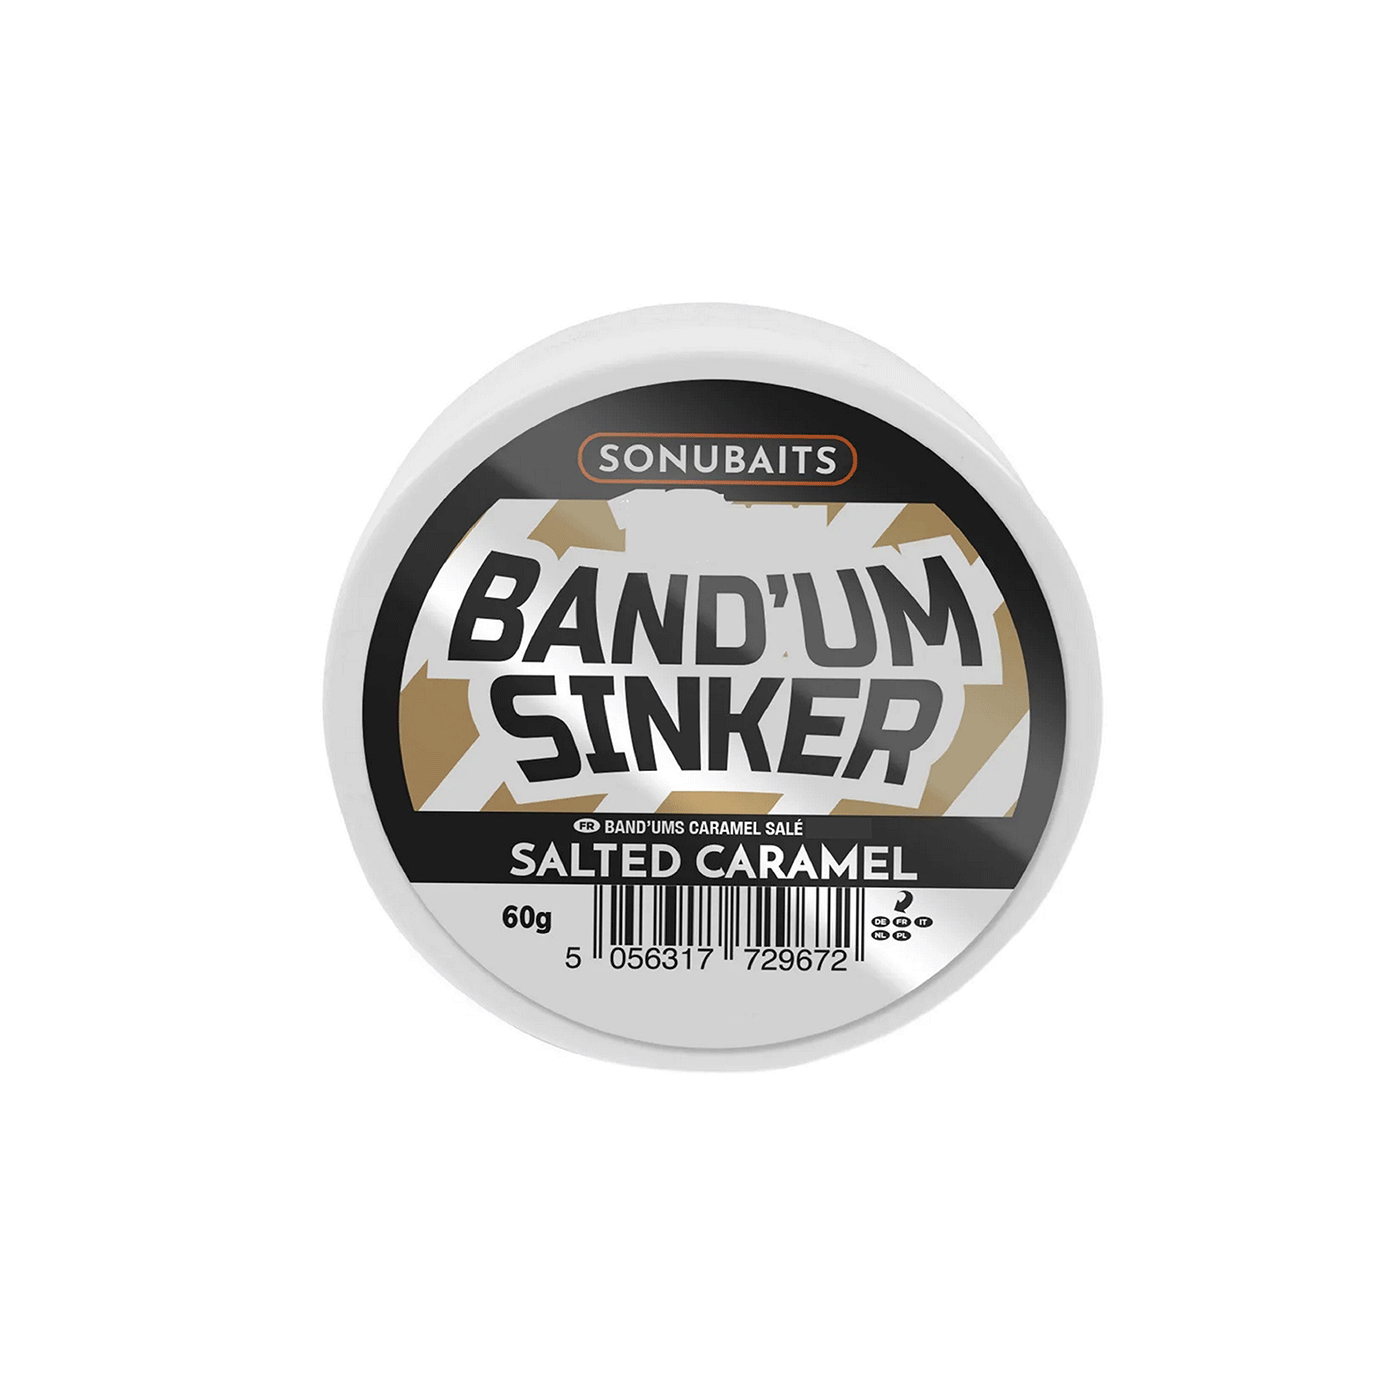 SONUBAITS - 6MM BAND'UM SINKER 60g - Salted Caramel